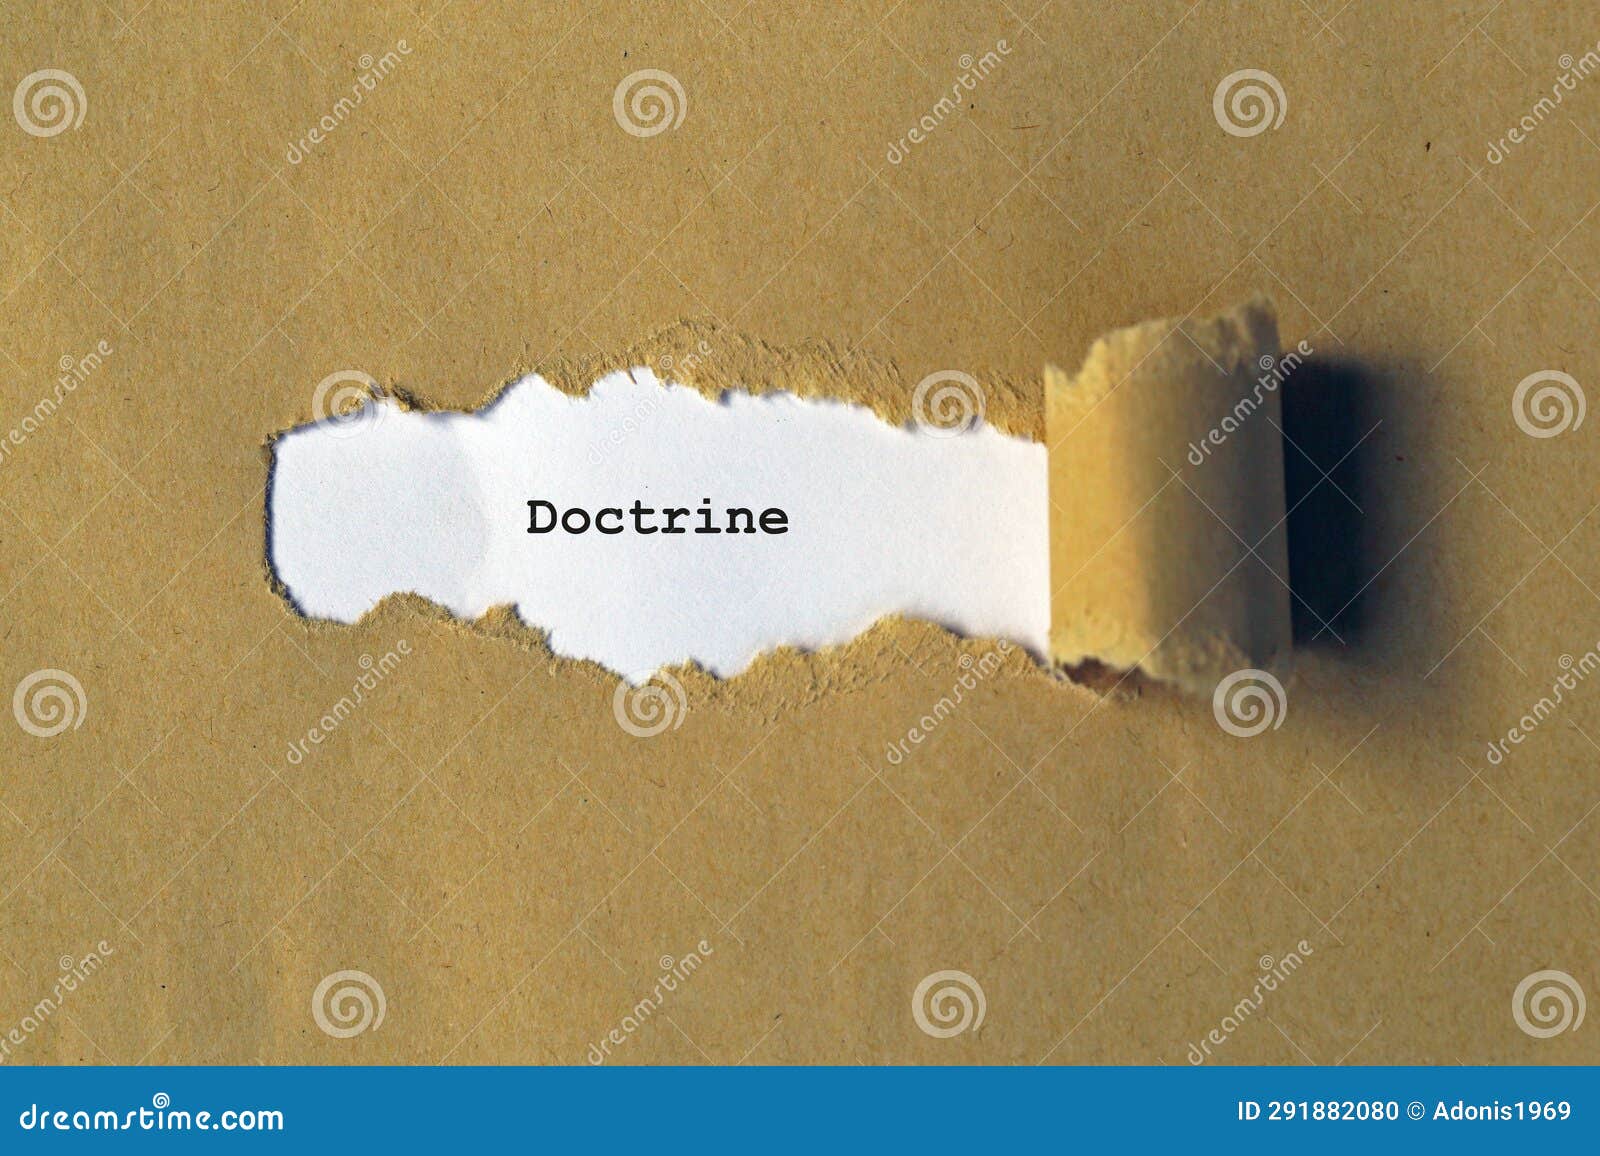 doctrine on white paper